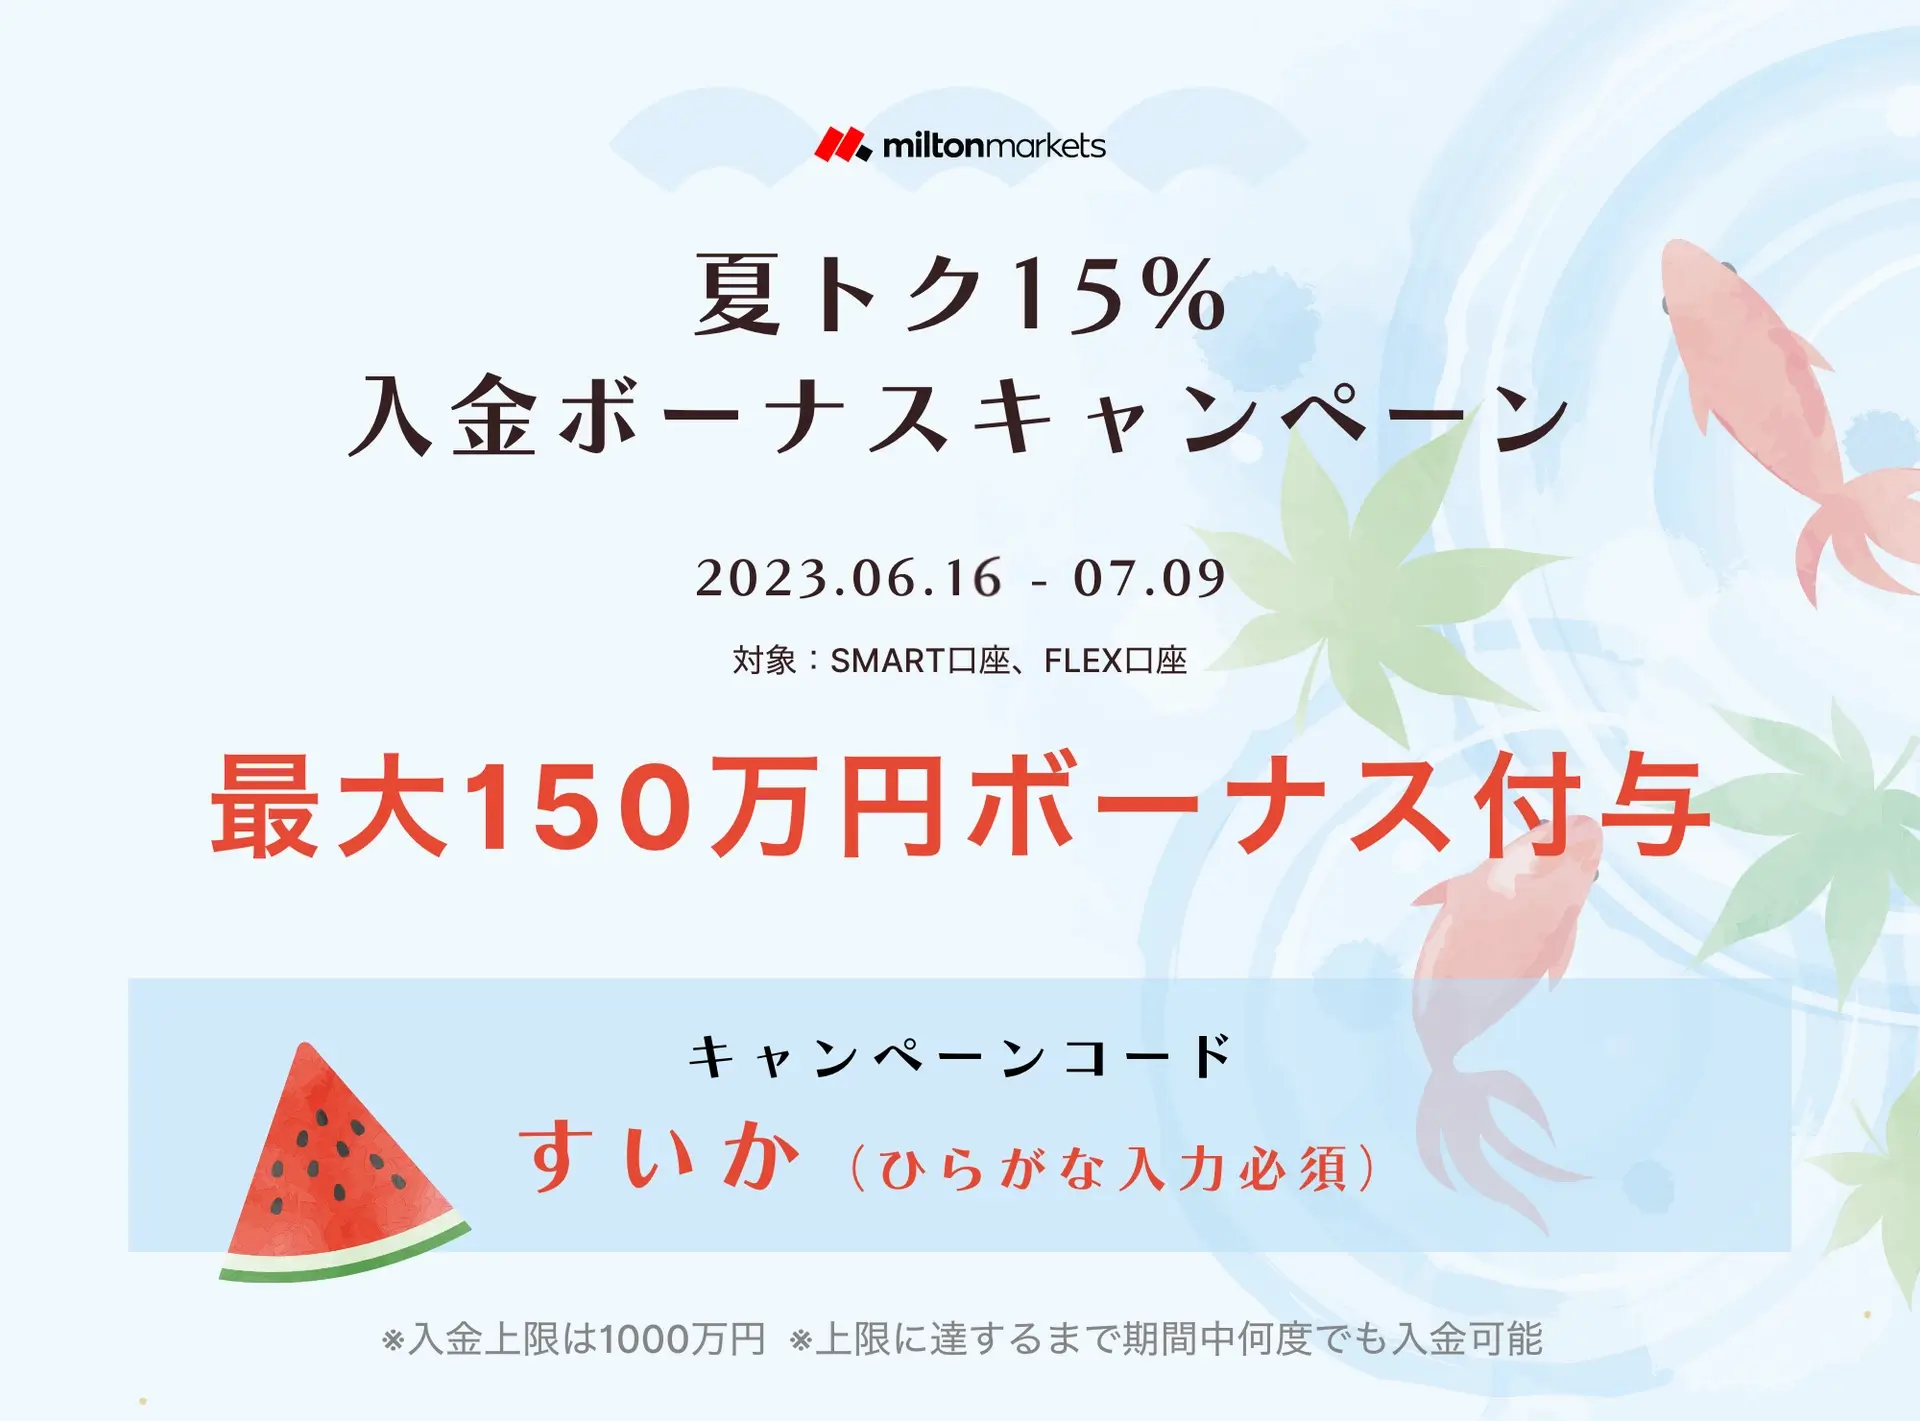 miltonmarkets 15%入金ボーナスキャンペーン